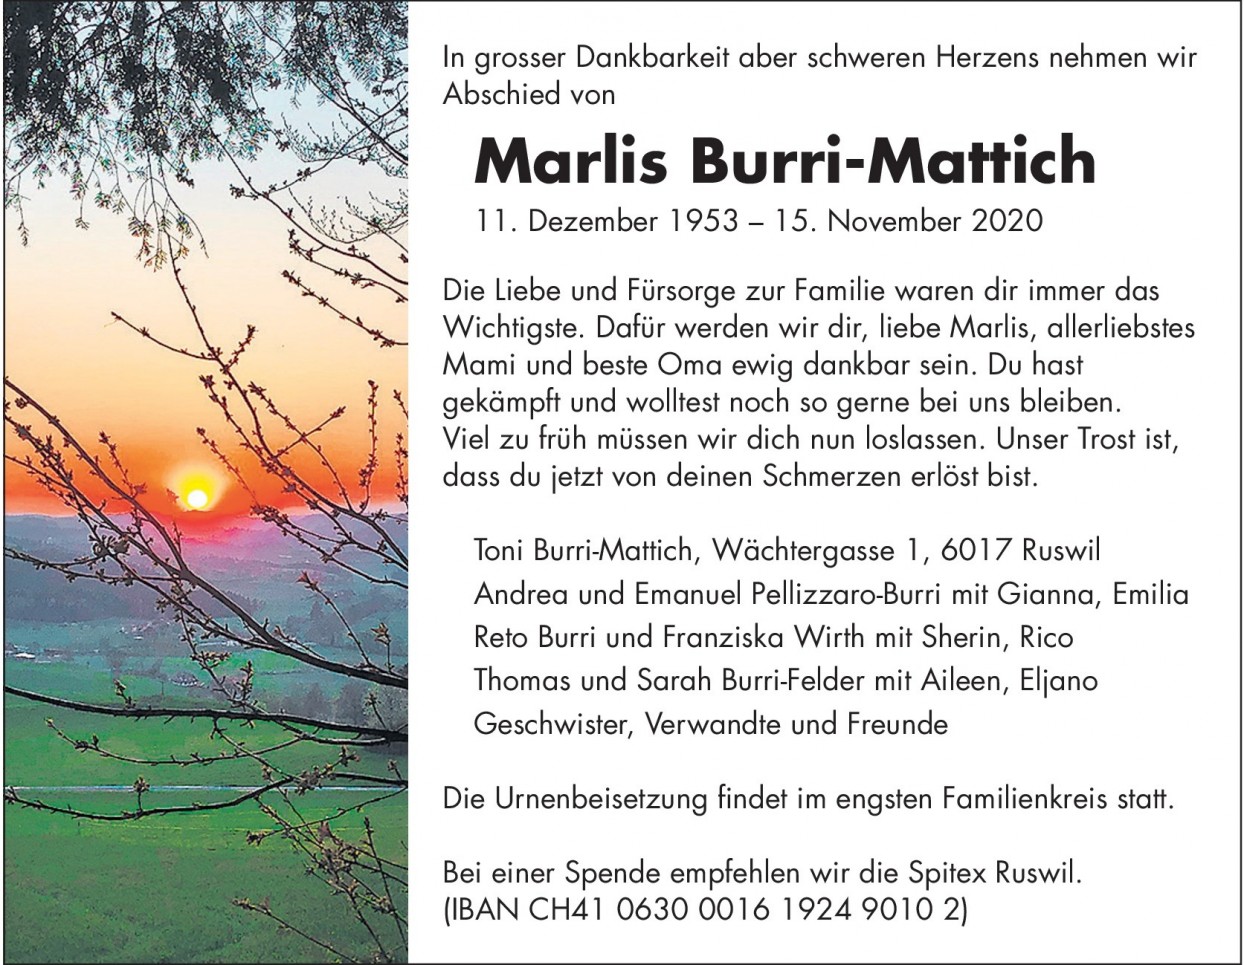 Marlis Burri-Mattich